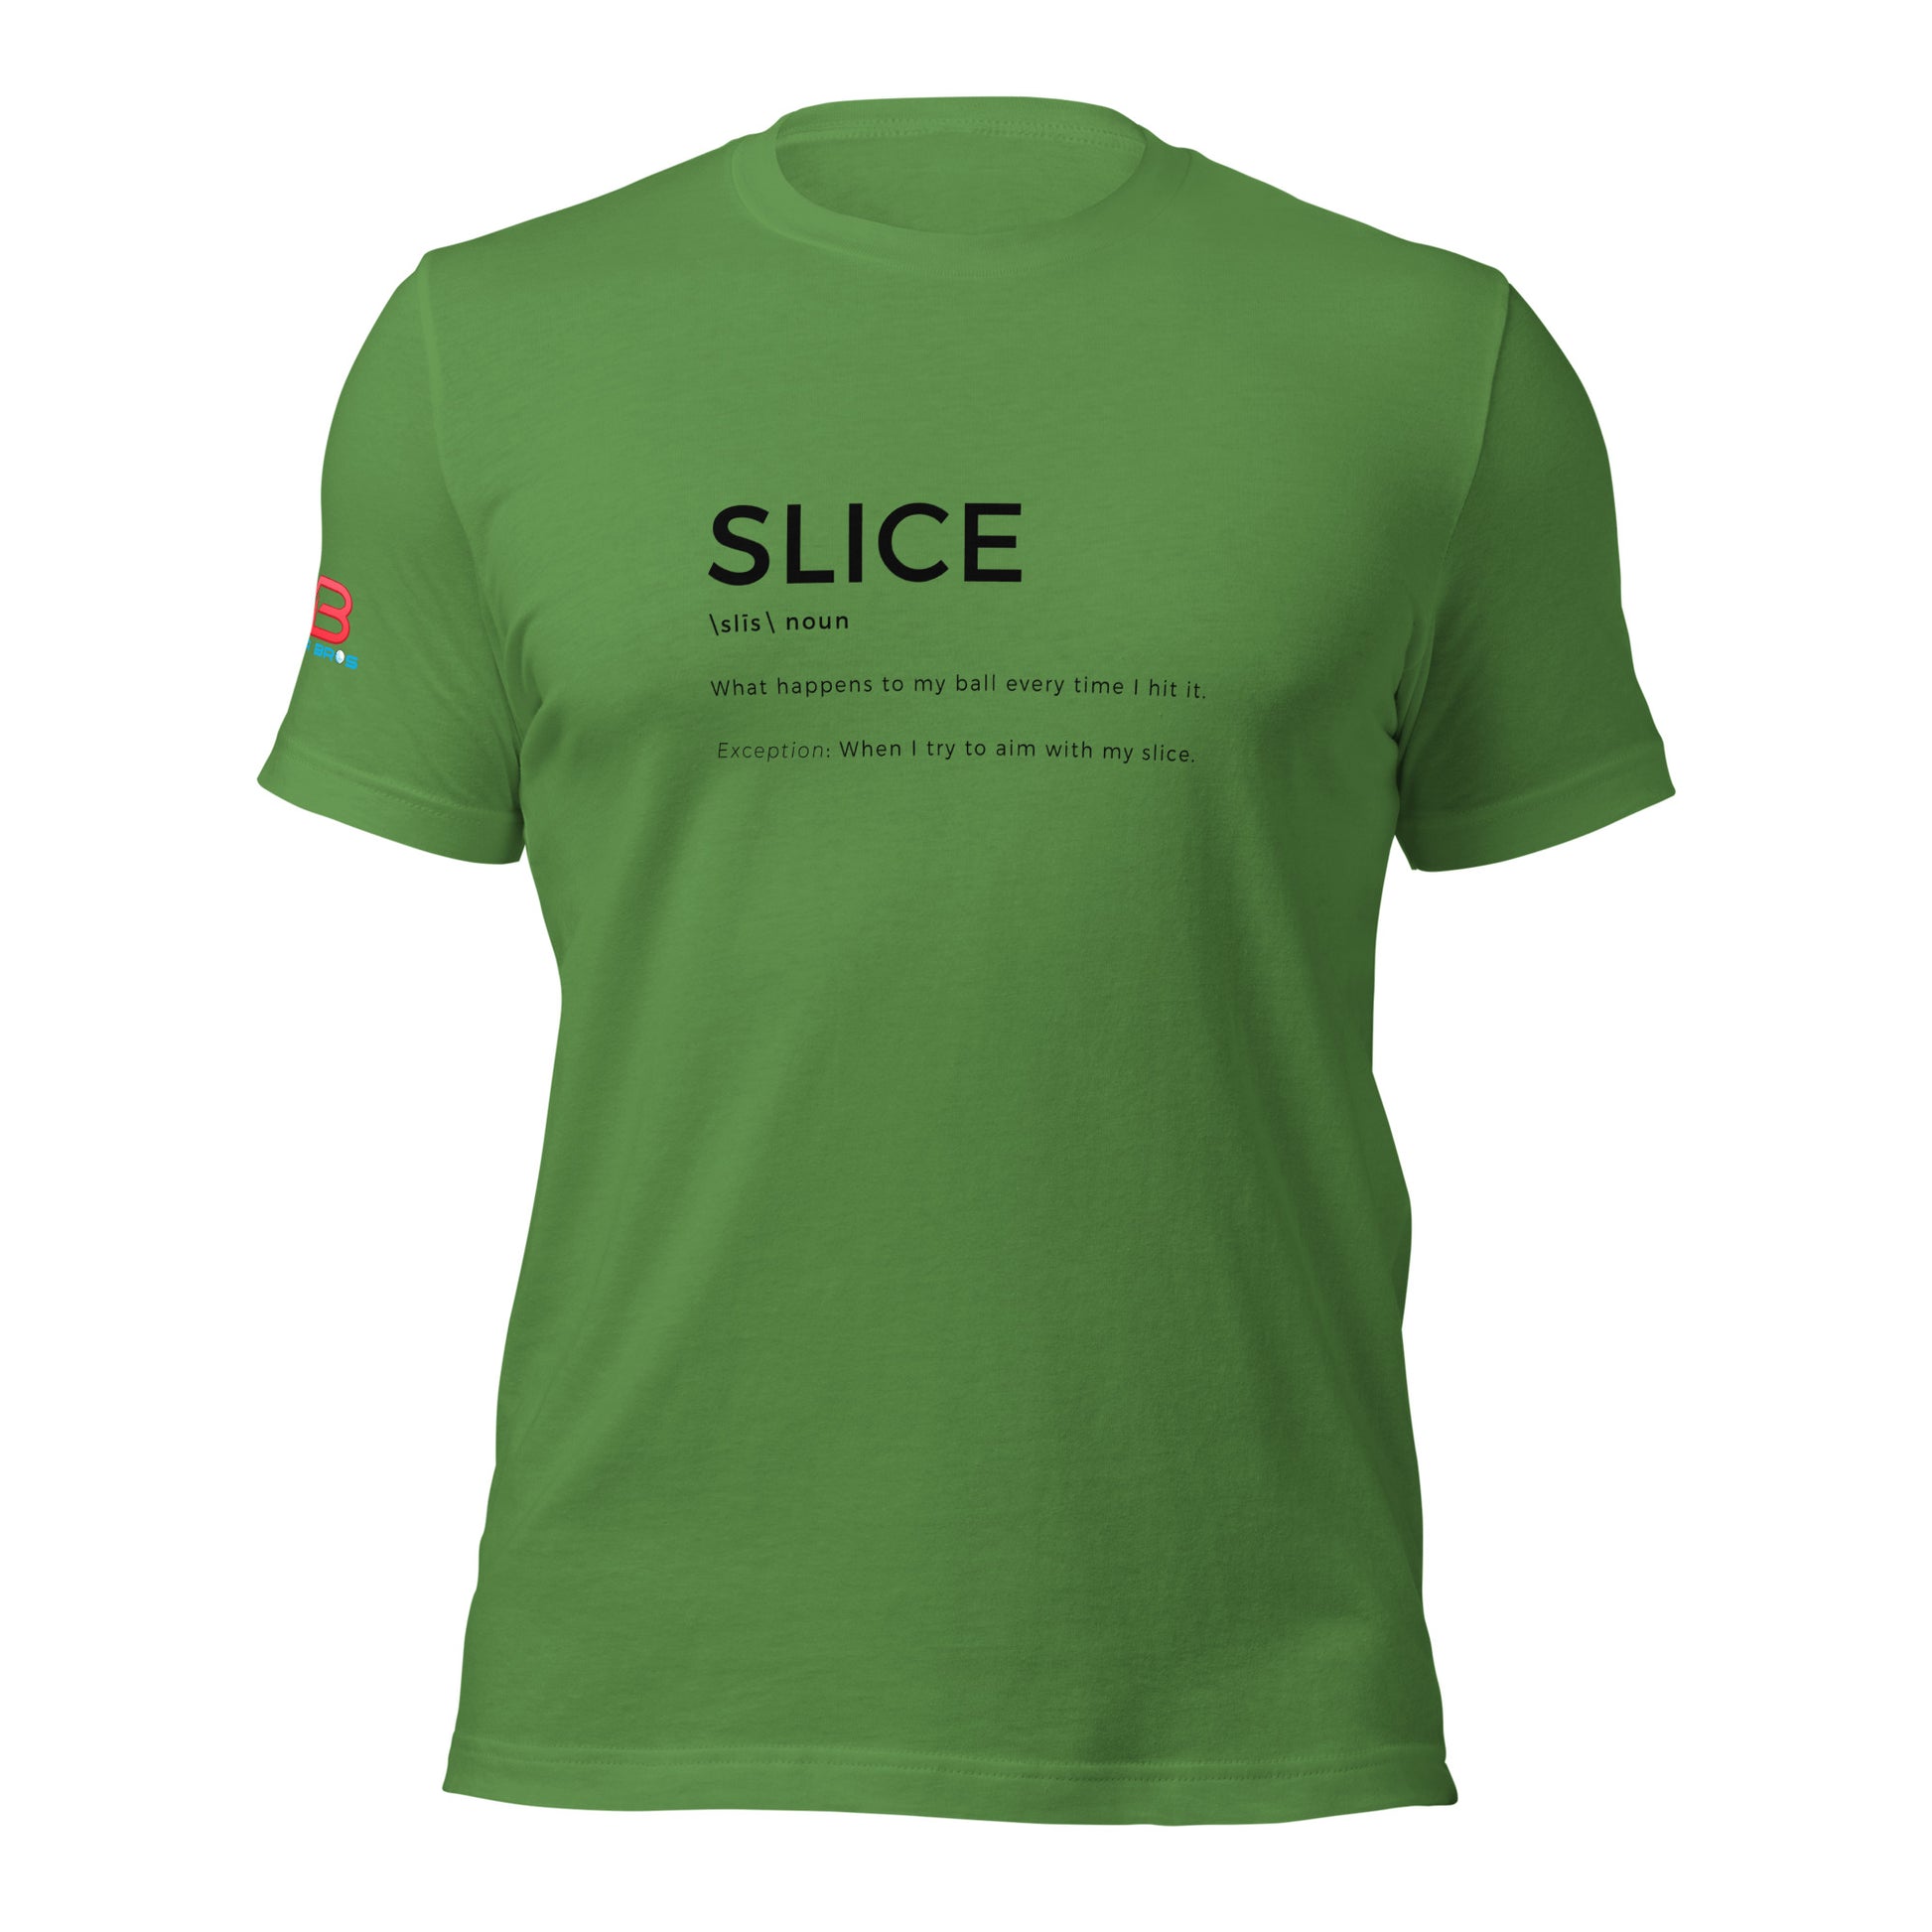 Slice Definition Tee Shirt